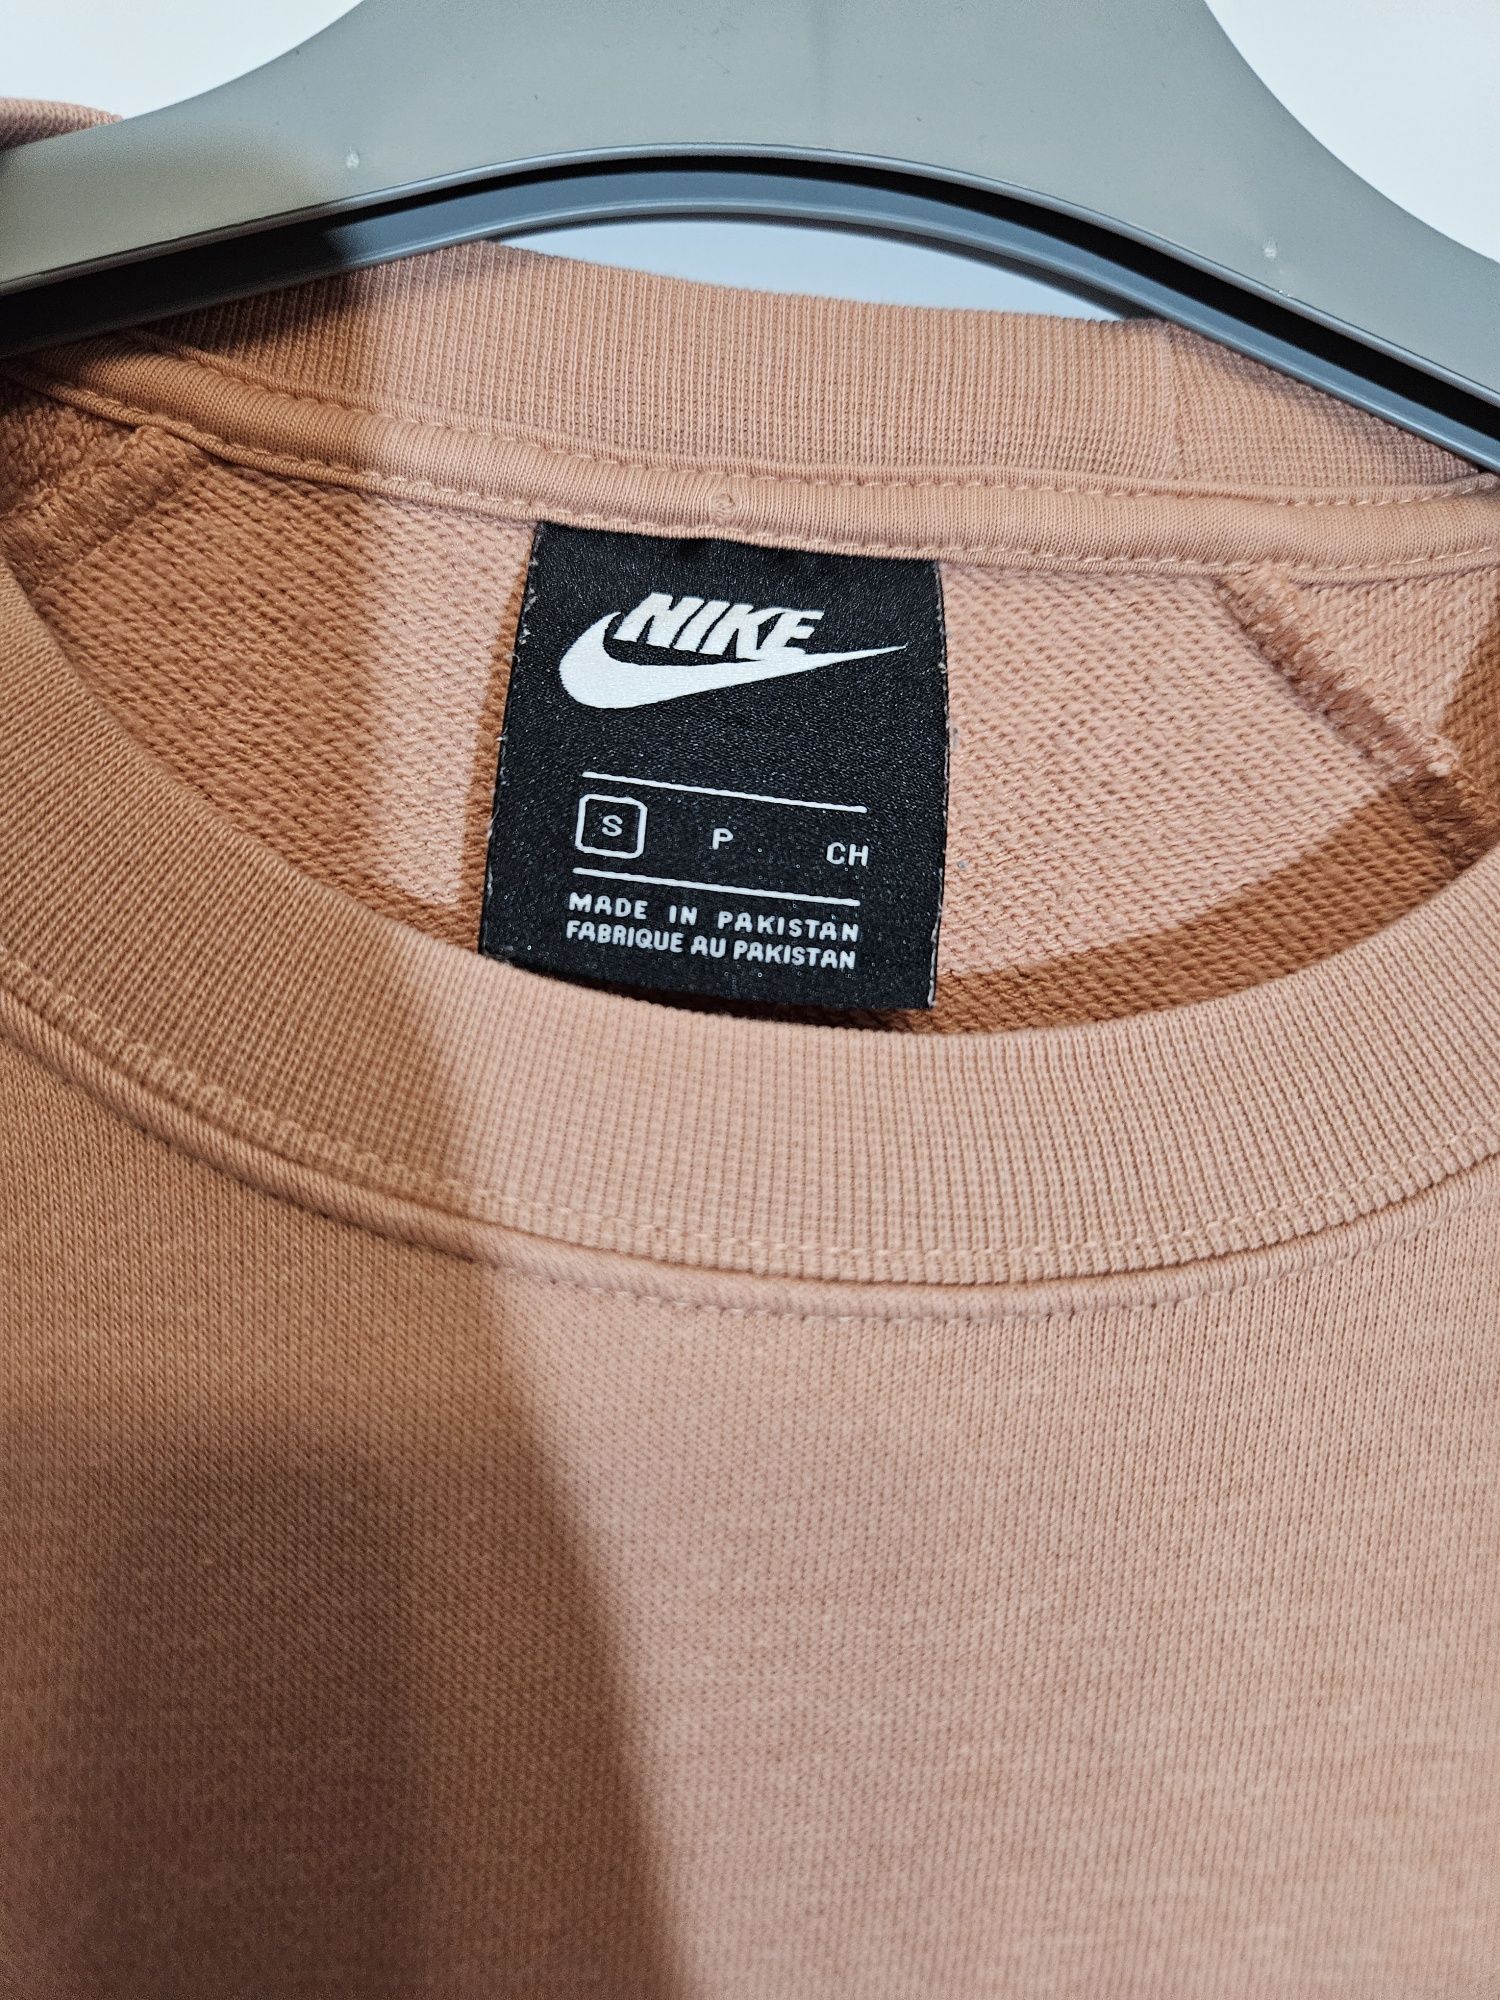 Bluza Nike damska S unikatowy kolor